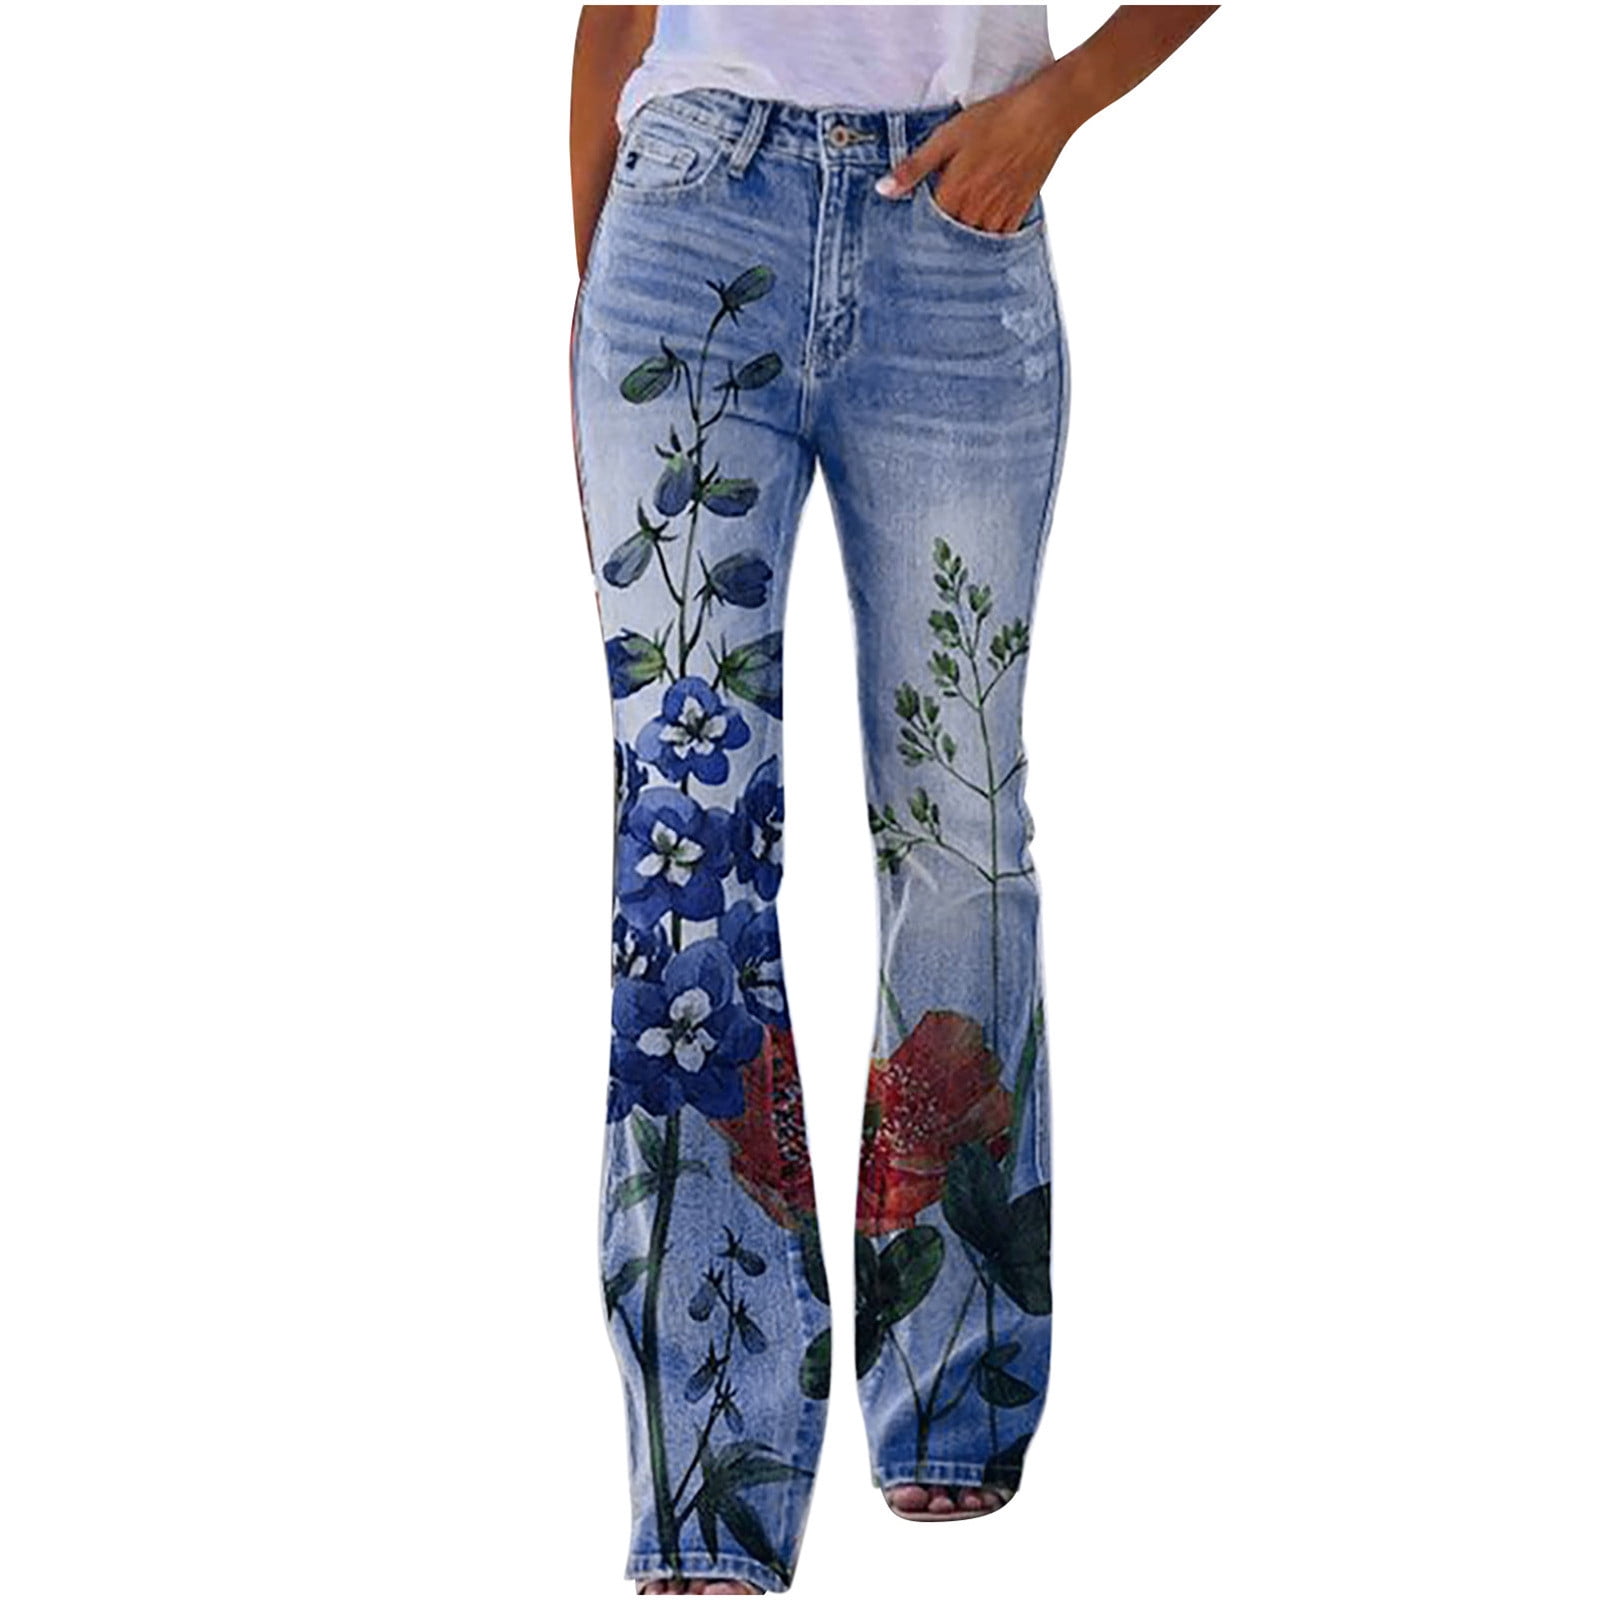 American Eagle Jeans Women's 6 Artist Flare Capri Dark Blue Stretch Denim  Pants